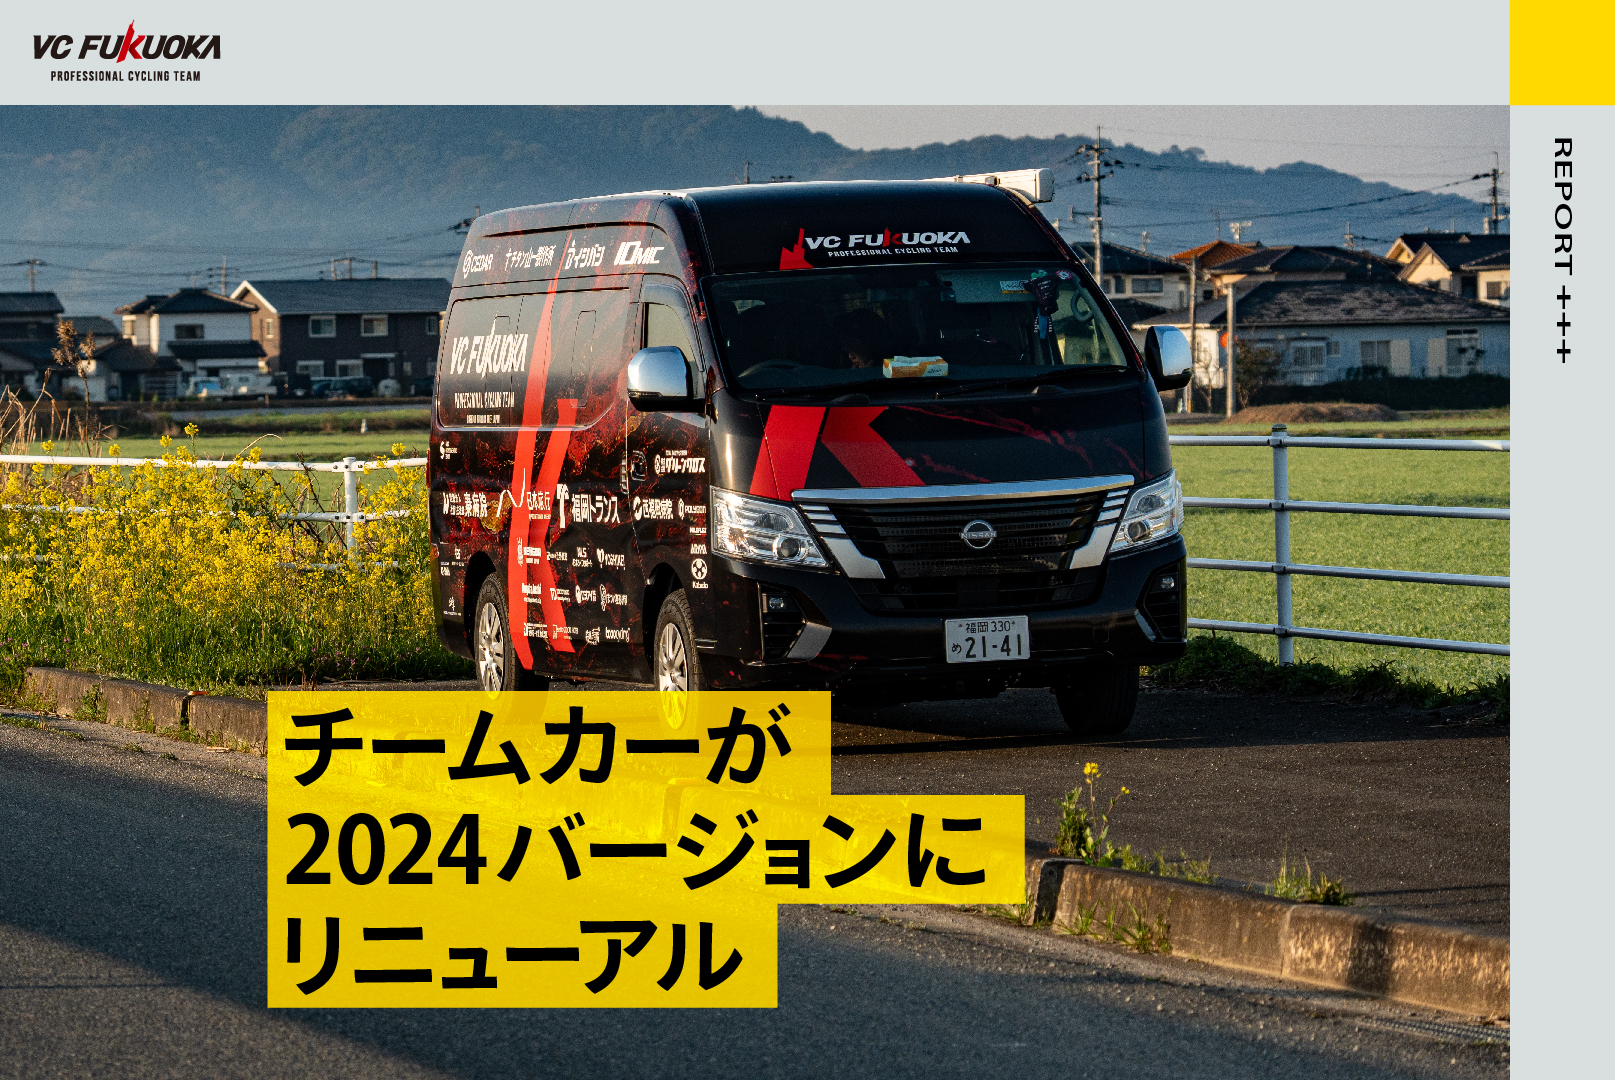 VC FUKUOKAチームカーを2024年版にリニューアル